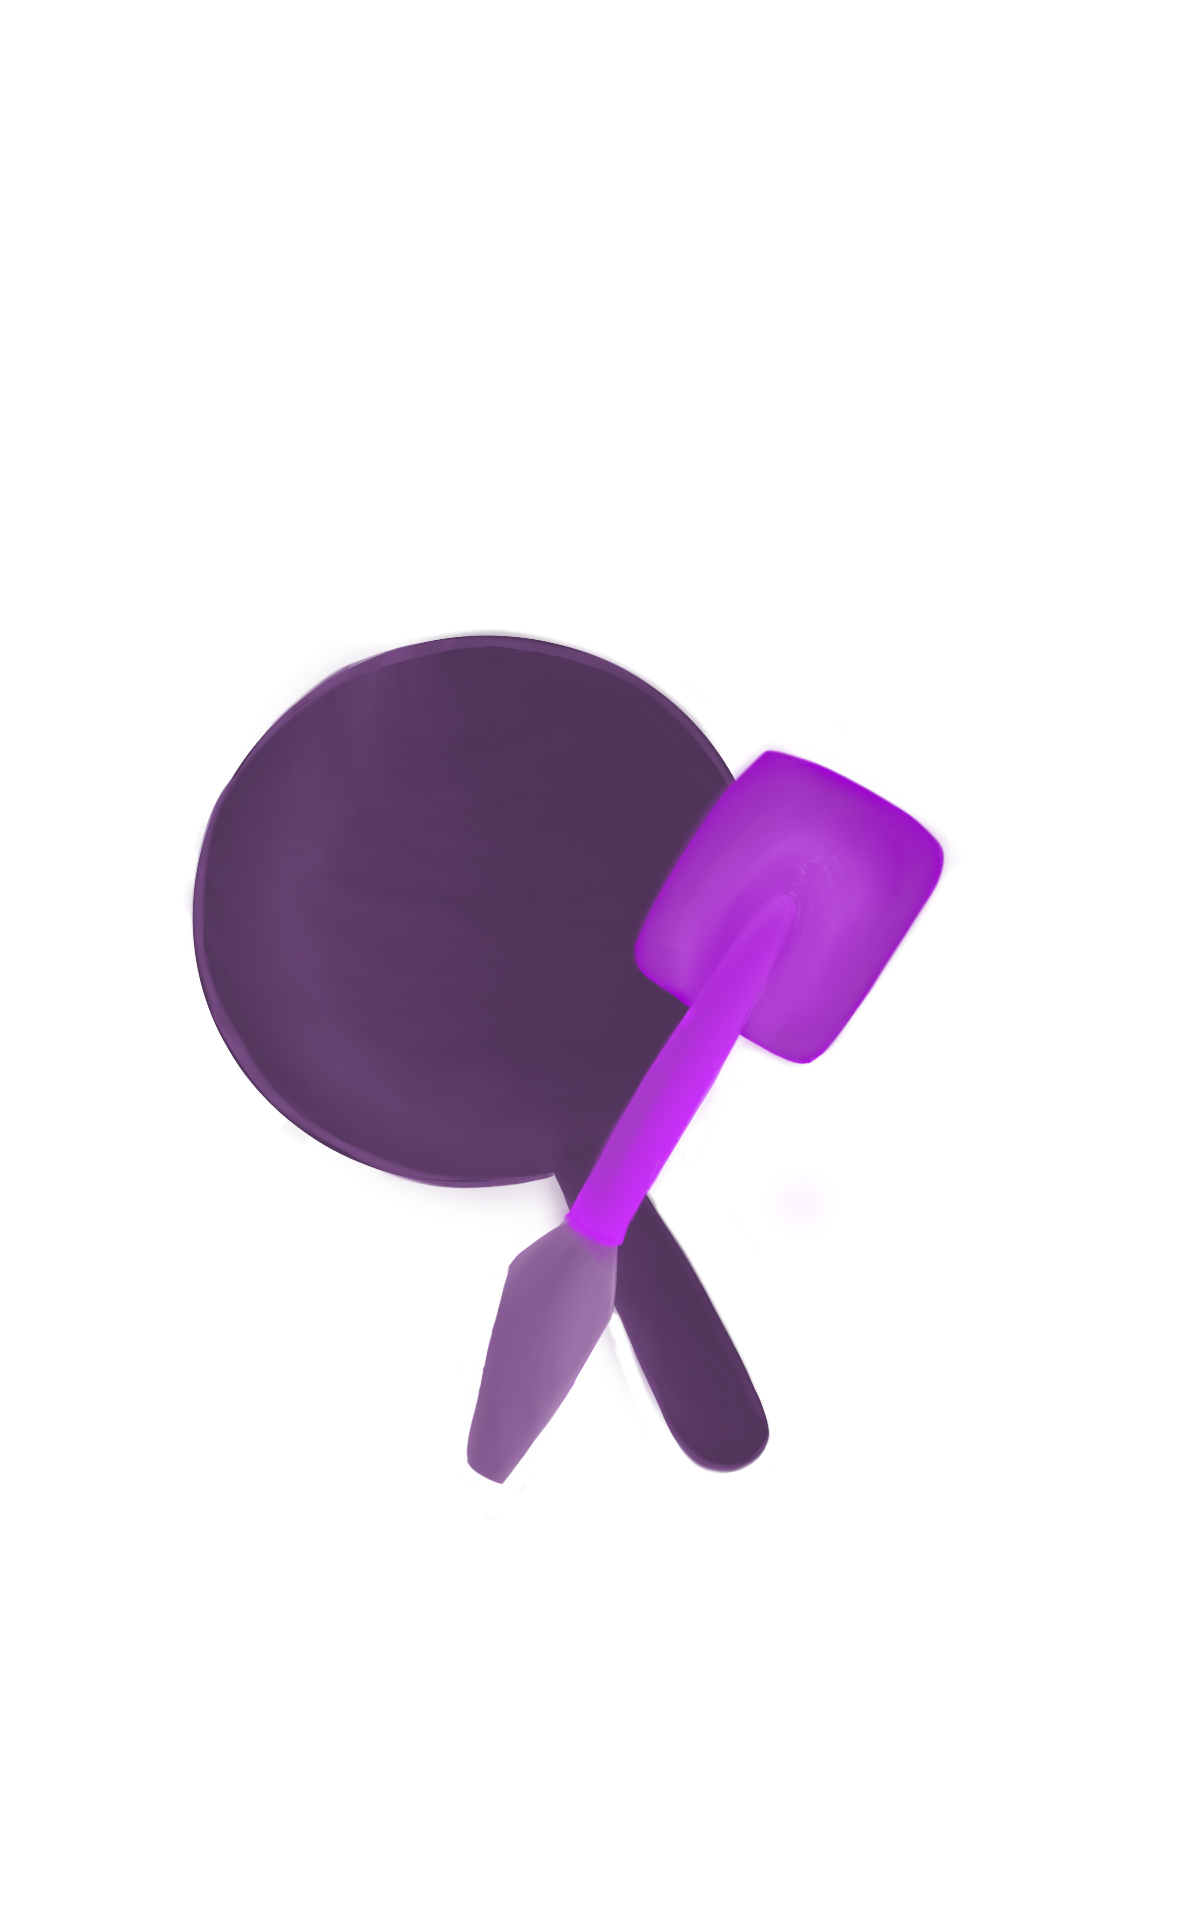 dark purple frying pan with a lighter magenta spatula